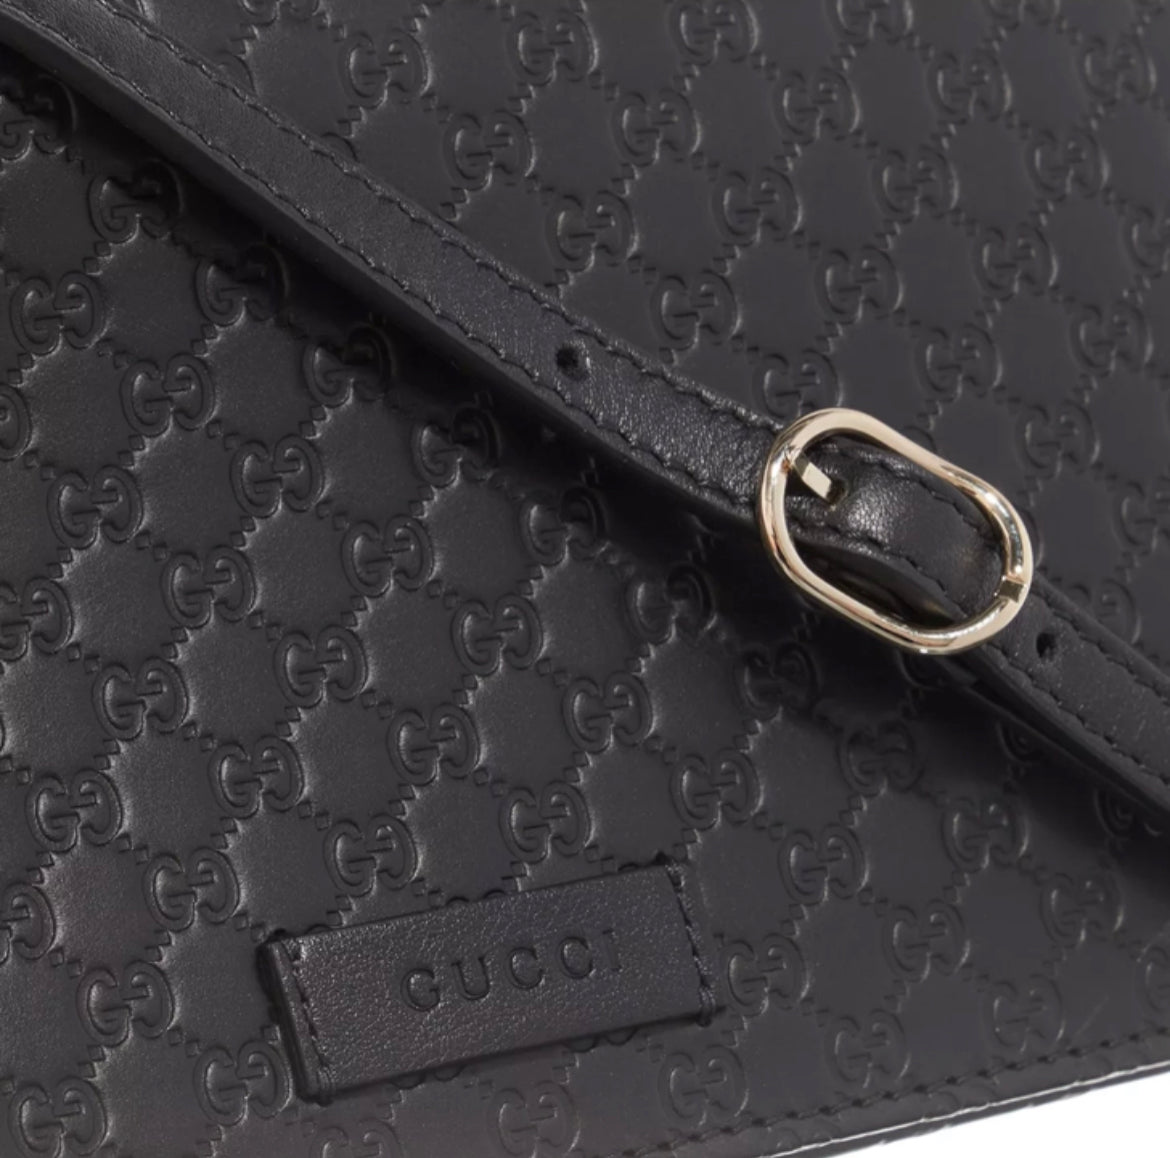 Conversion Kit for Gucci Soho Wristlet - Handbag Angels